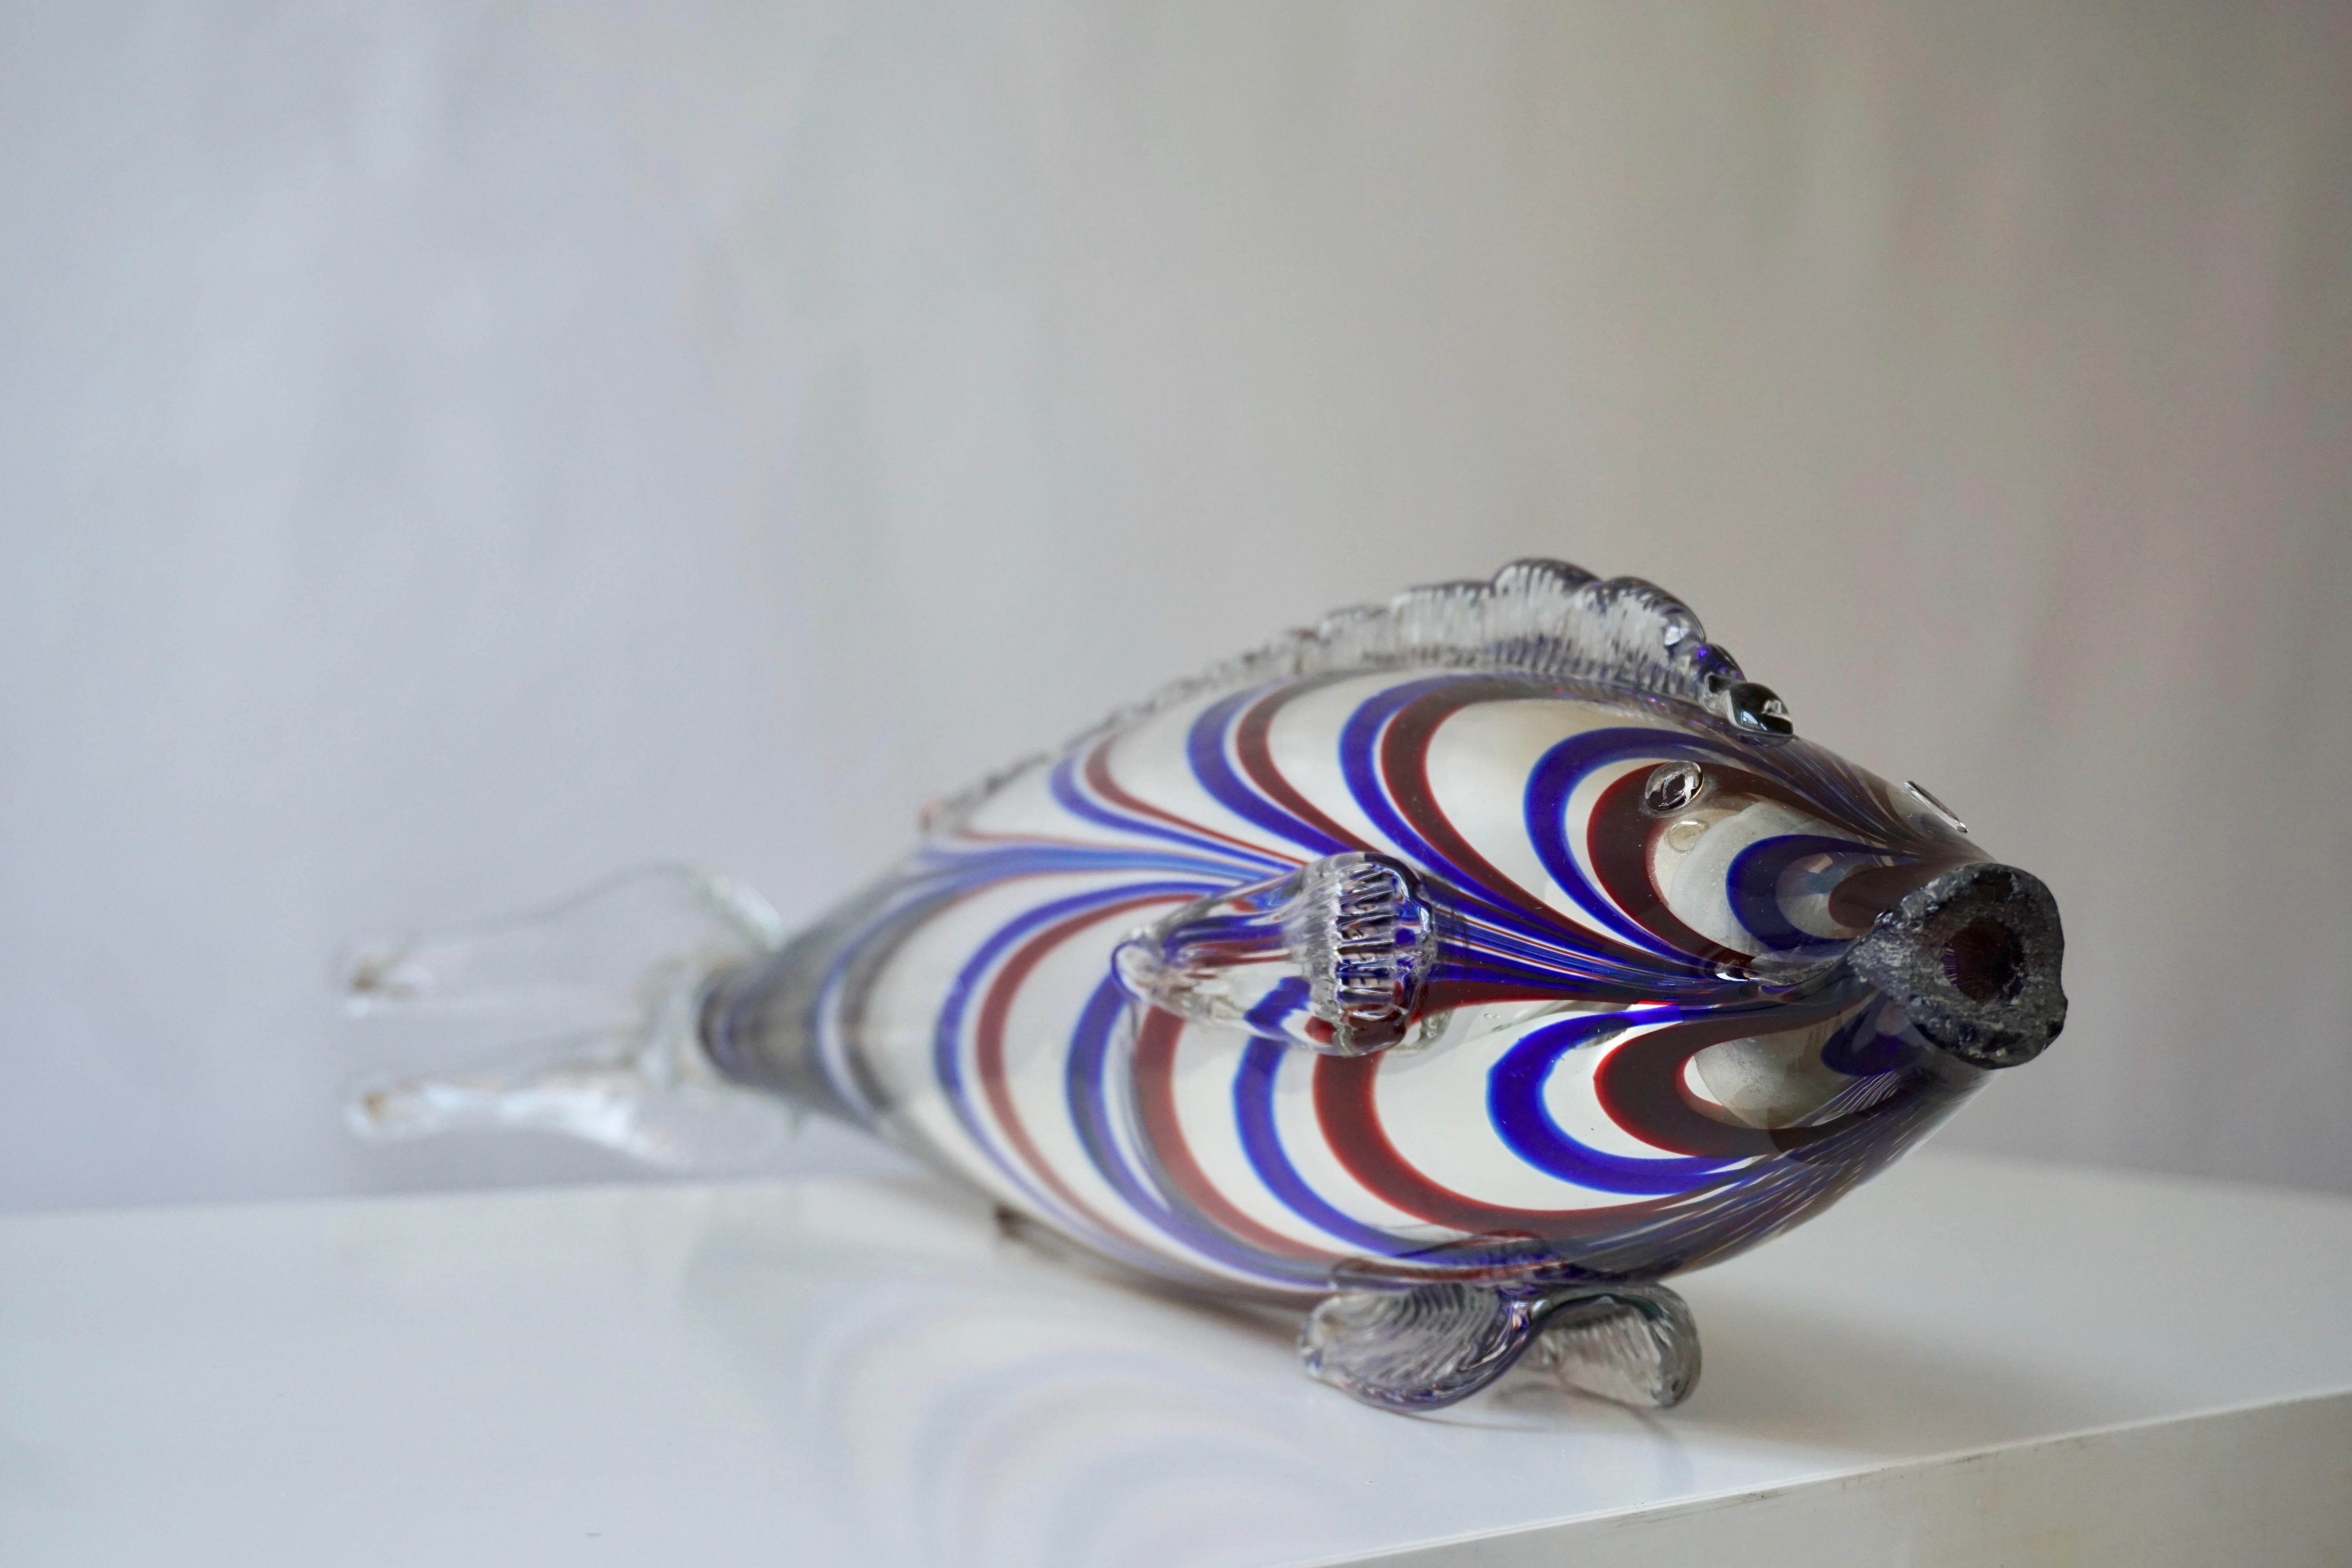 20th Century Murano Glass Fish Sculpture For Sale